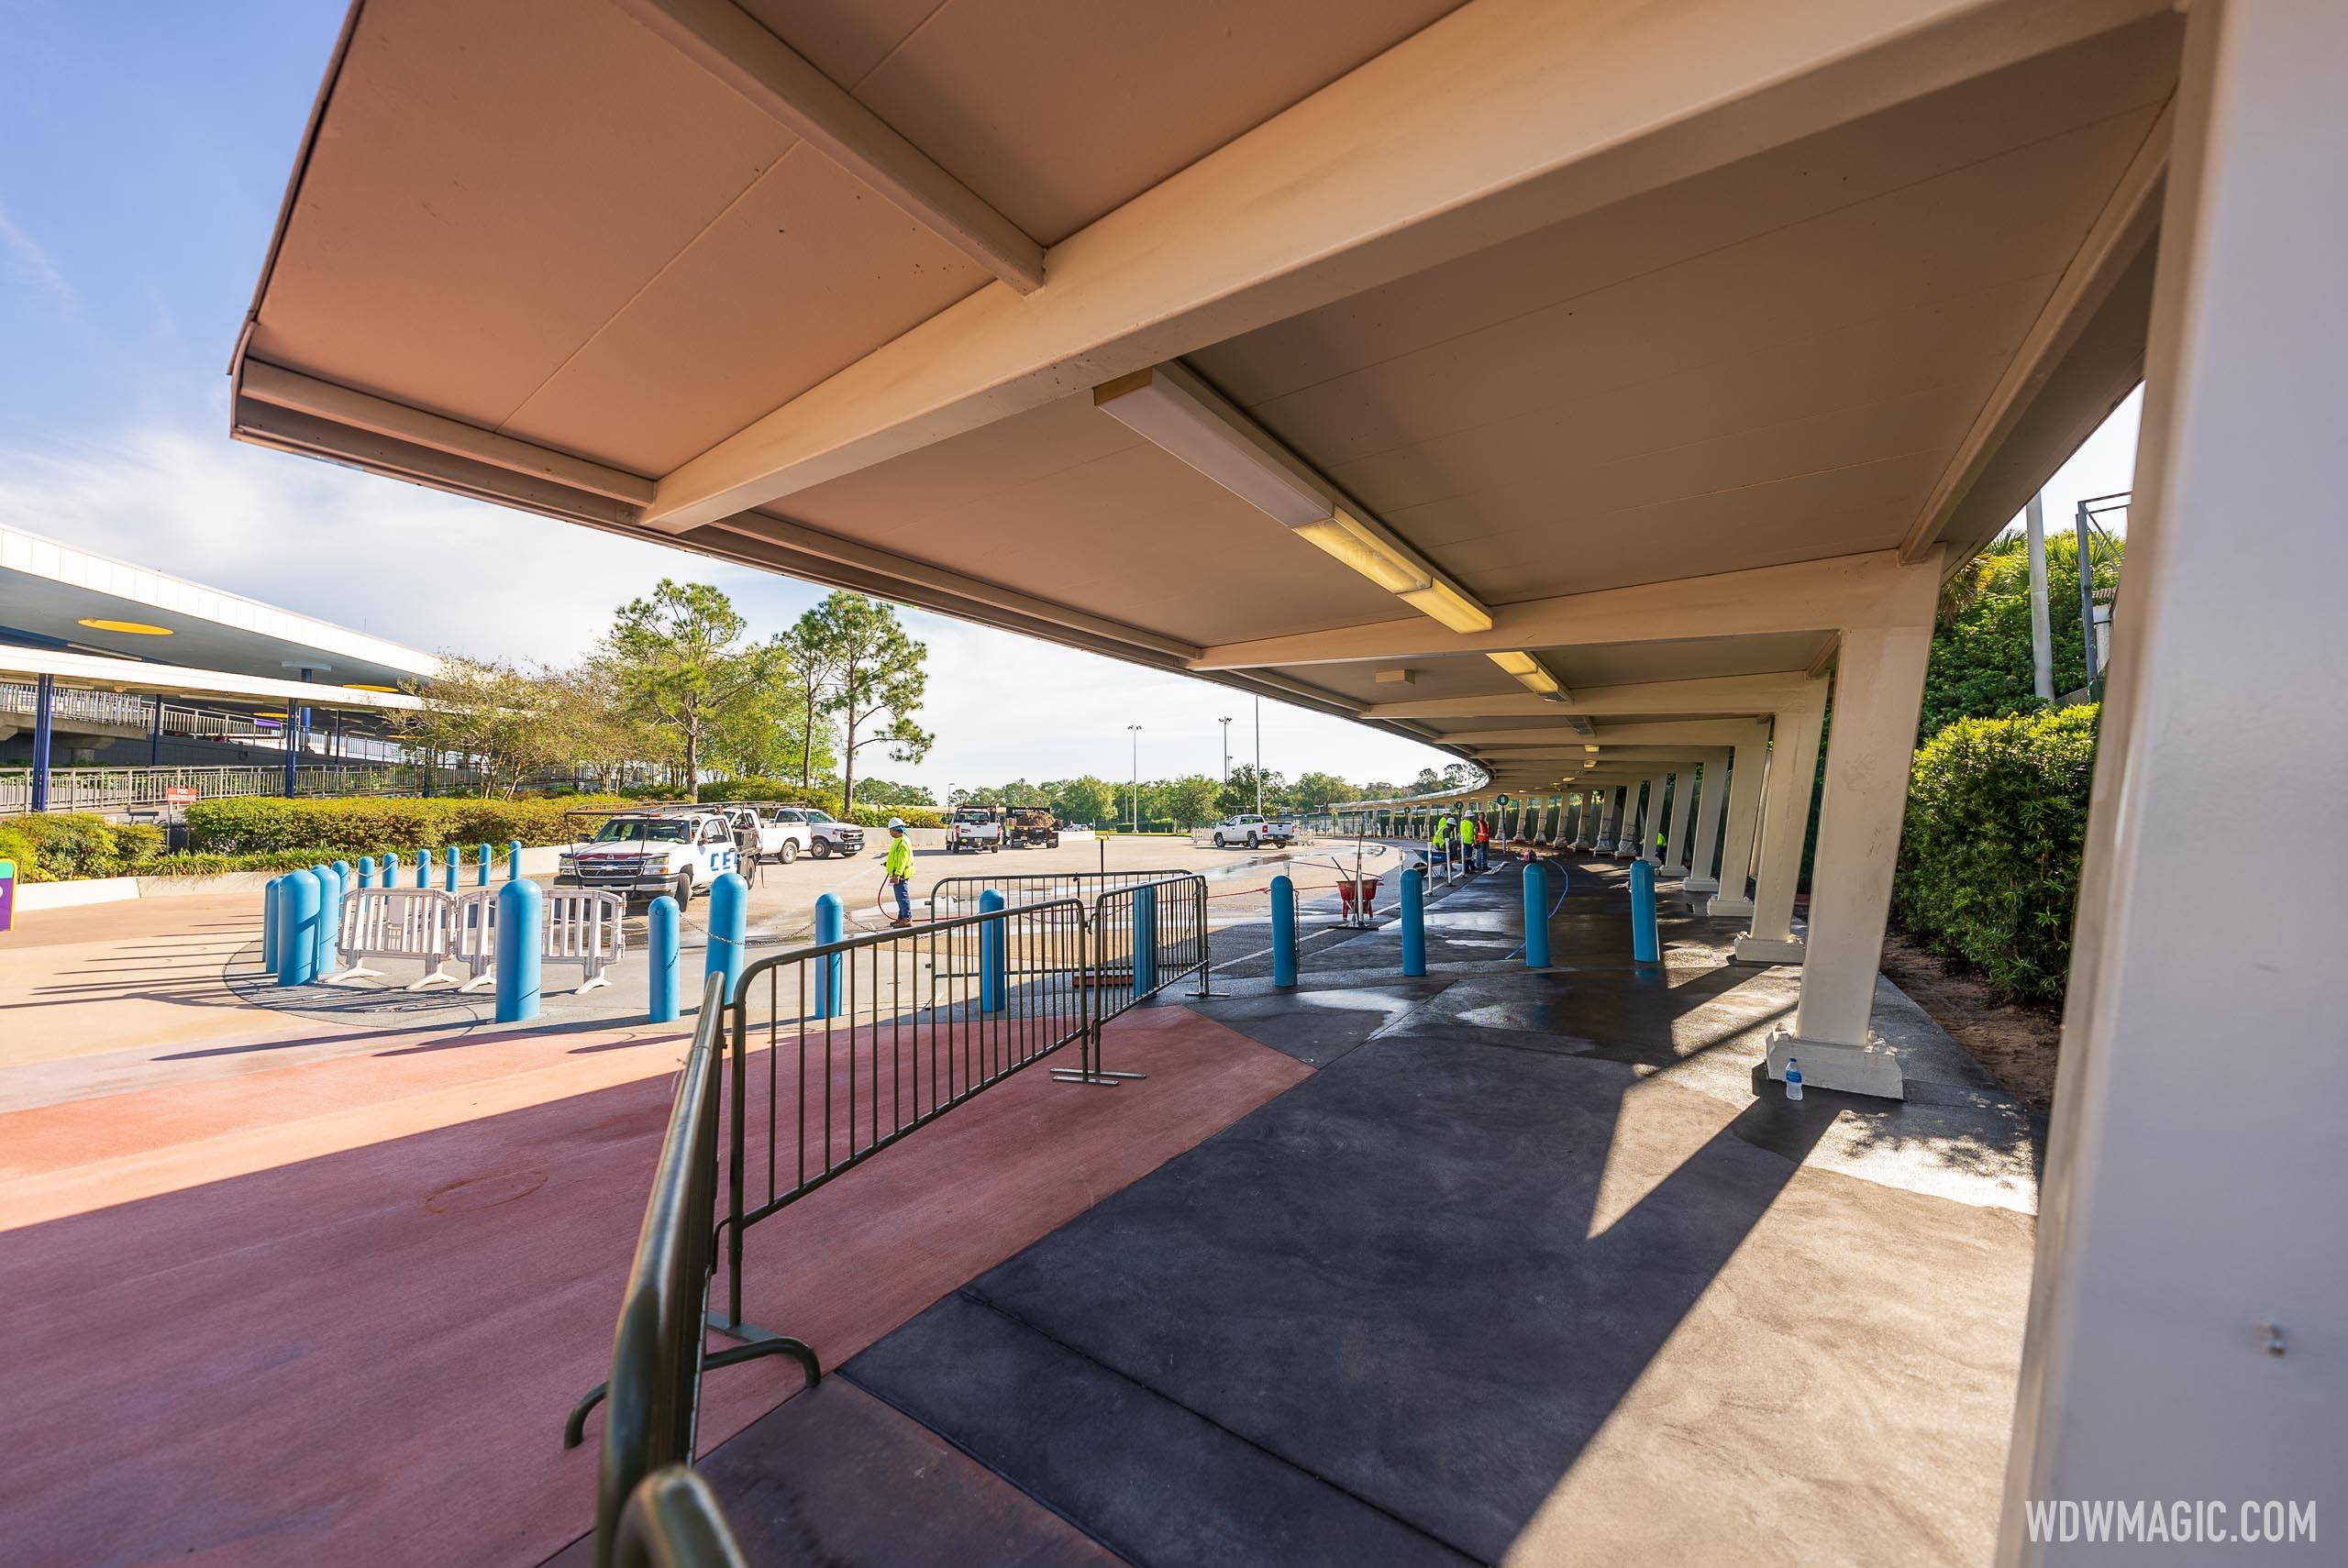 Walt Disney World Transportation and Ticket Center bus stops get a refurbishment